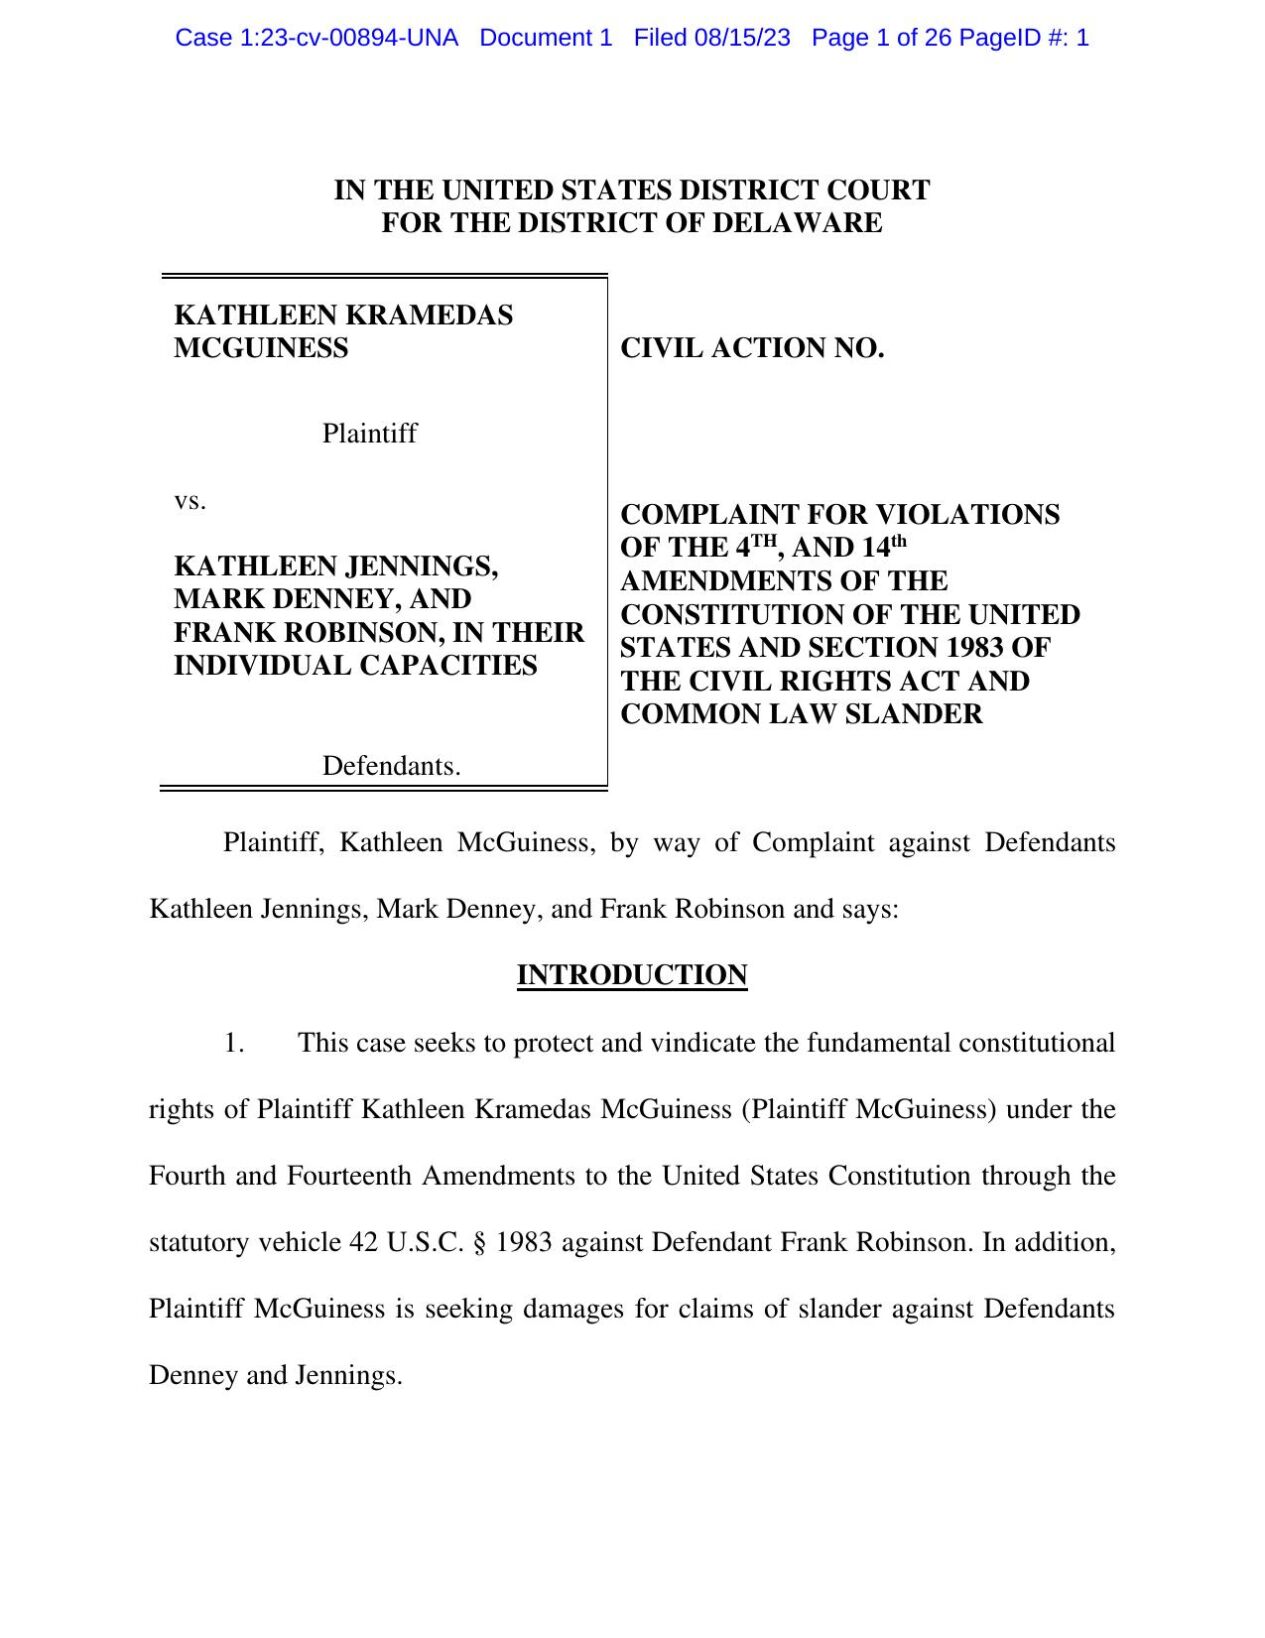 McGuiness Lawsuit Documents